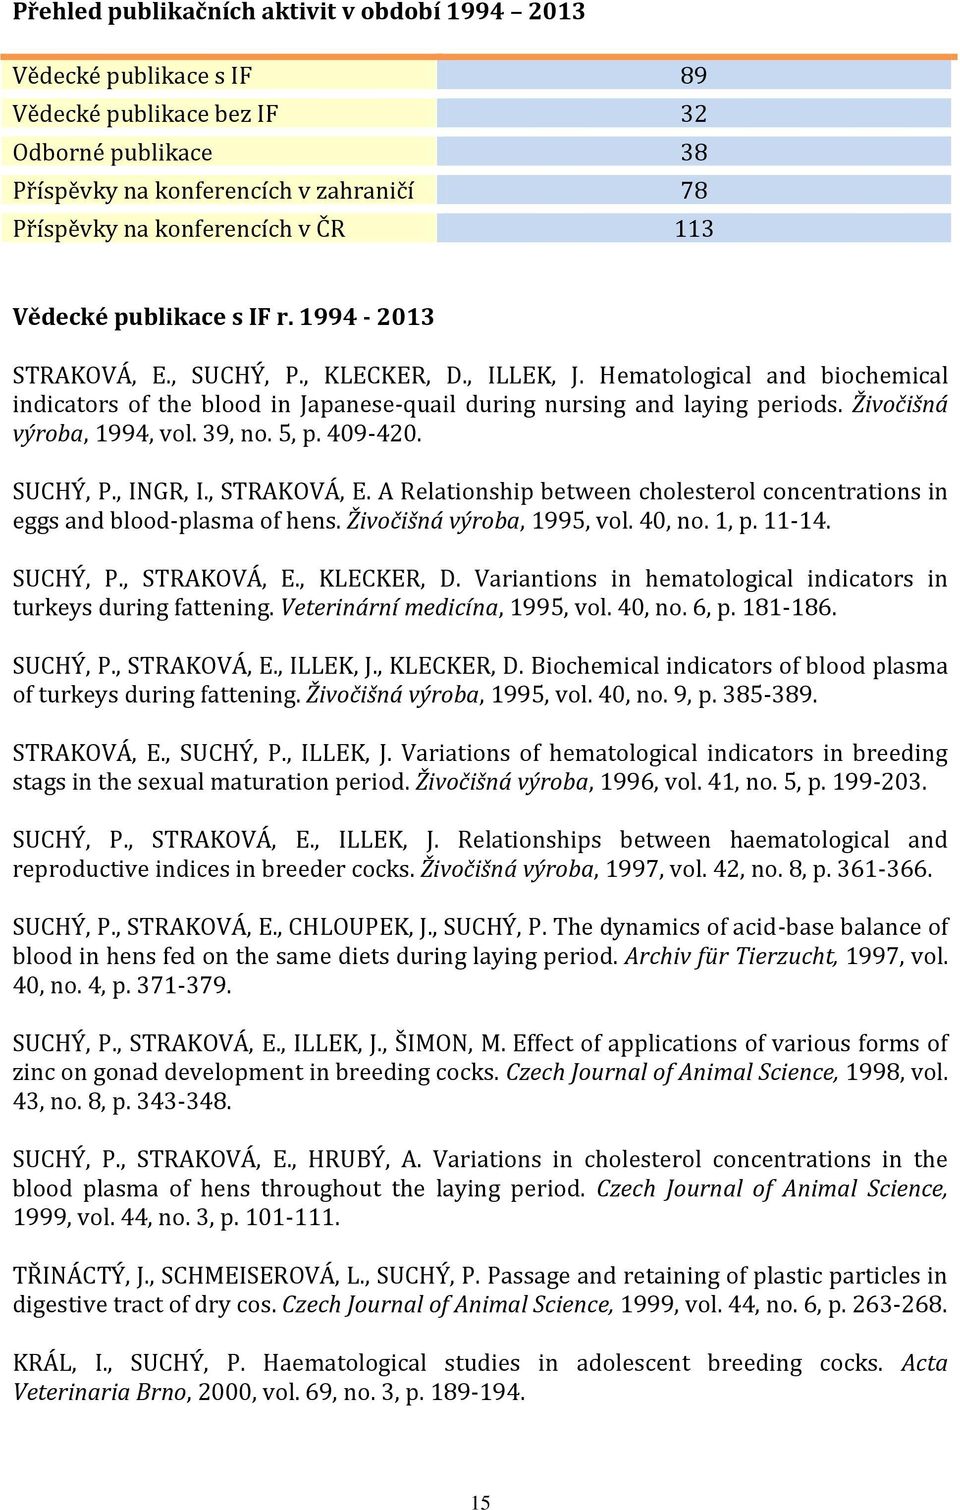 Živočišná výroba, 1994, vol. 39, no. 5, p. 409-420. SUCHÝ, P., INGR, I., STRAKOVÁ, E. A Relationship between cholesterol concentrations in eggs and blood-plasma of hens. Živočišná výroba, 1995, vol.